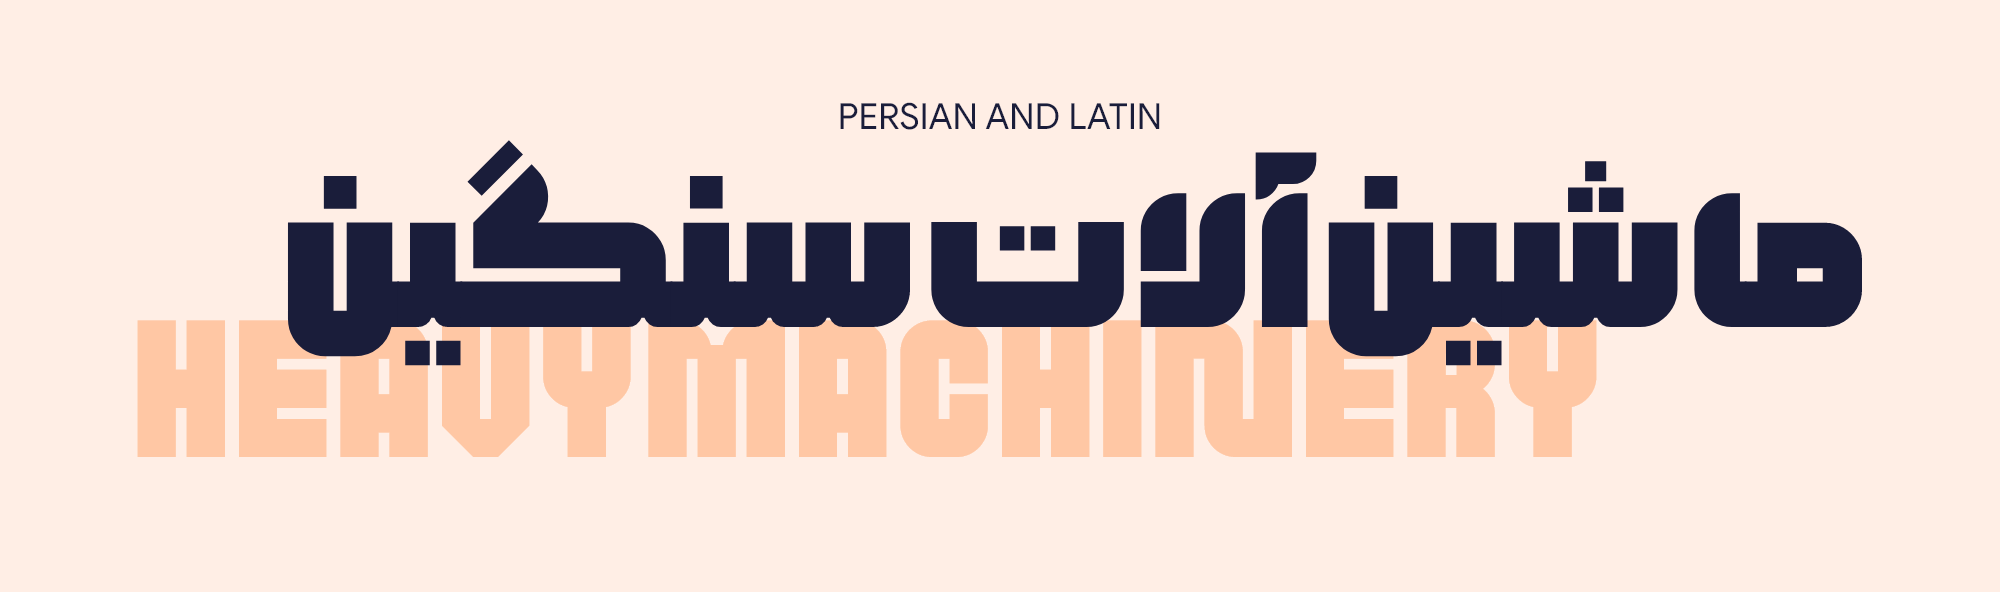 PERSIAN VS LATIN 3